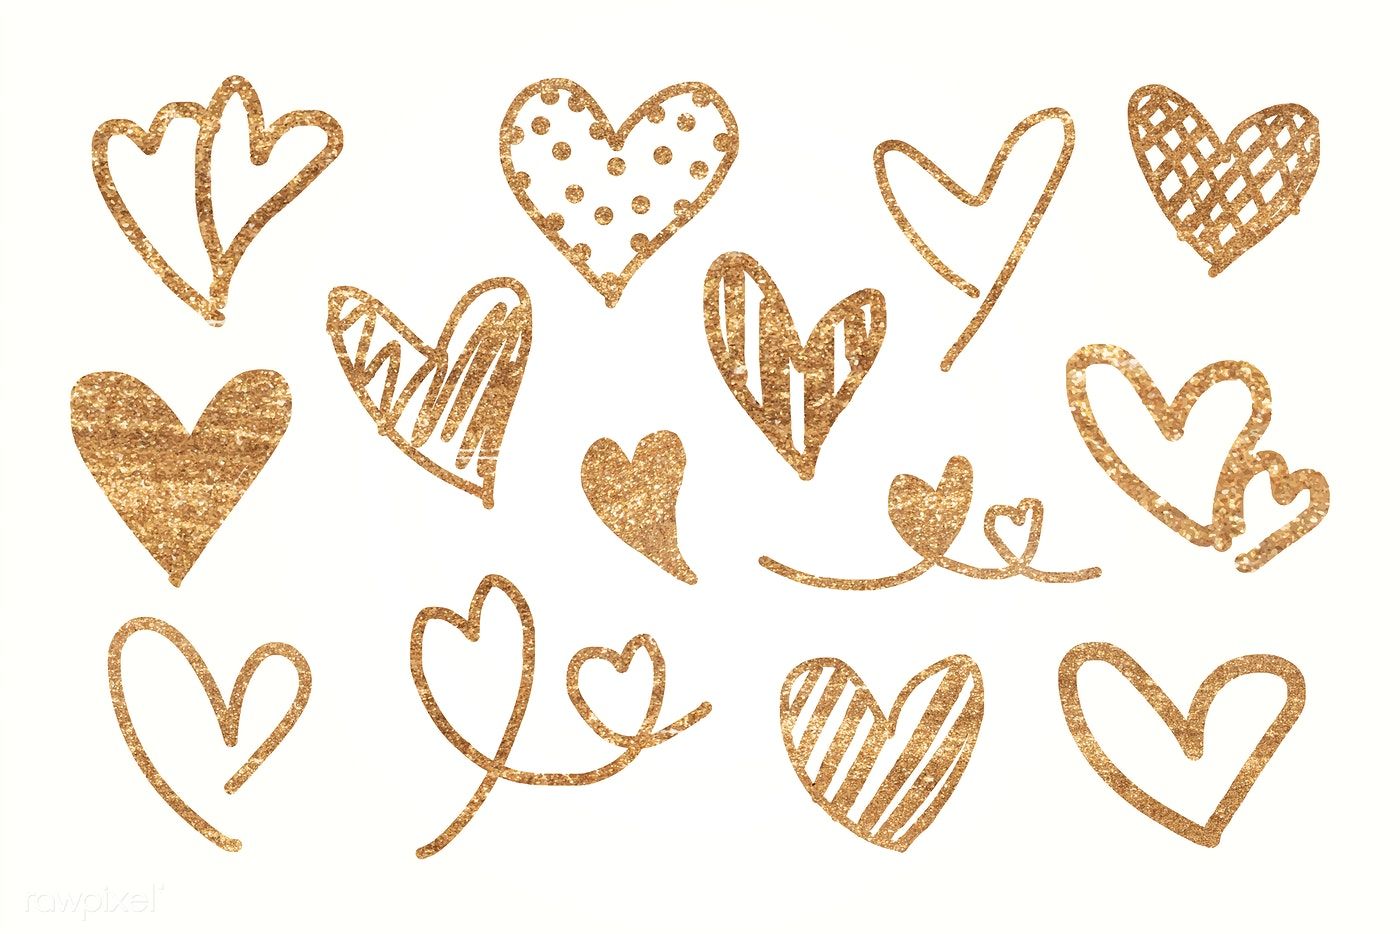 Golden hearts pattern wallpaper vector collection / Adj. Pattern wallpaper, Heart patterns, Vector free